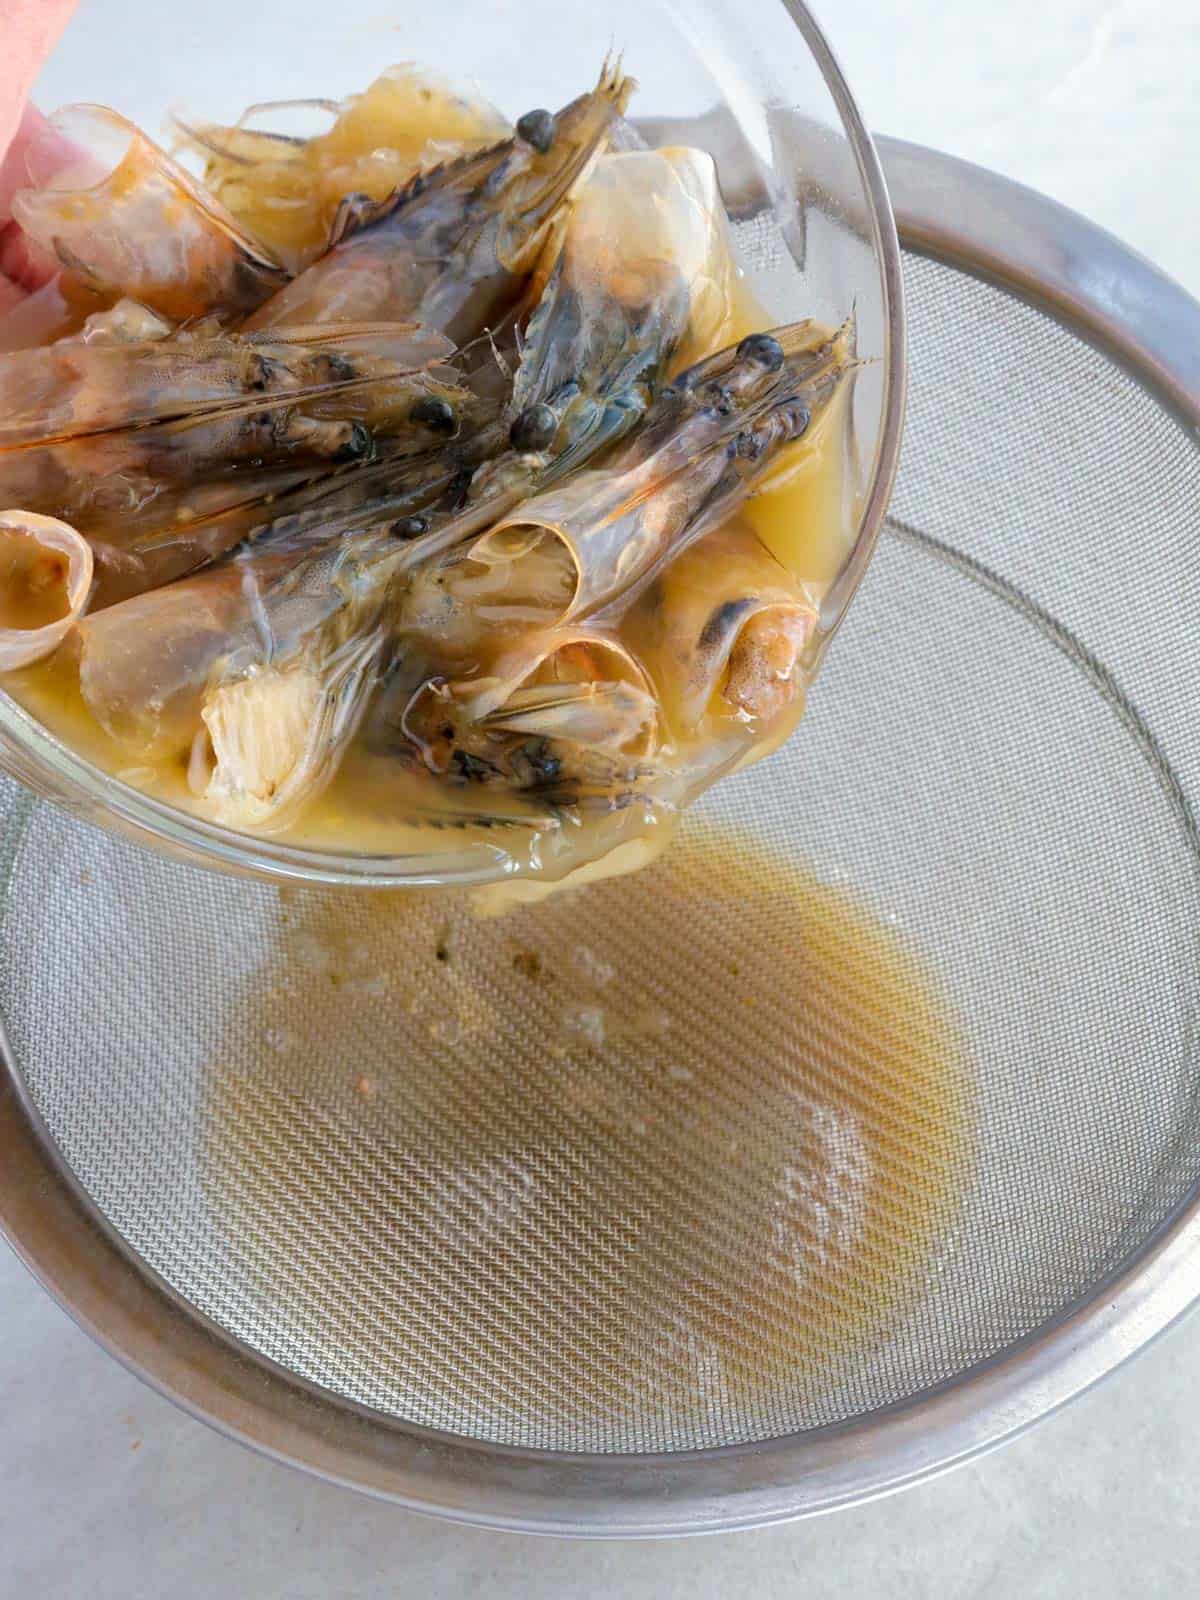 straining juice from shrimp heads ina bowl